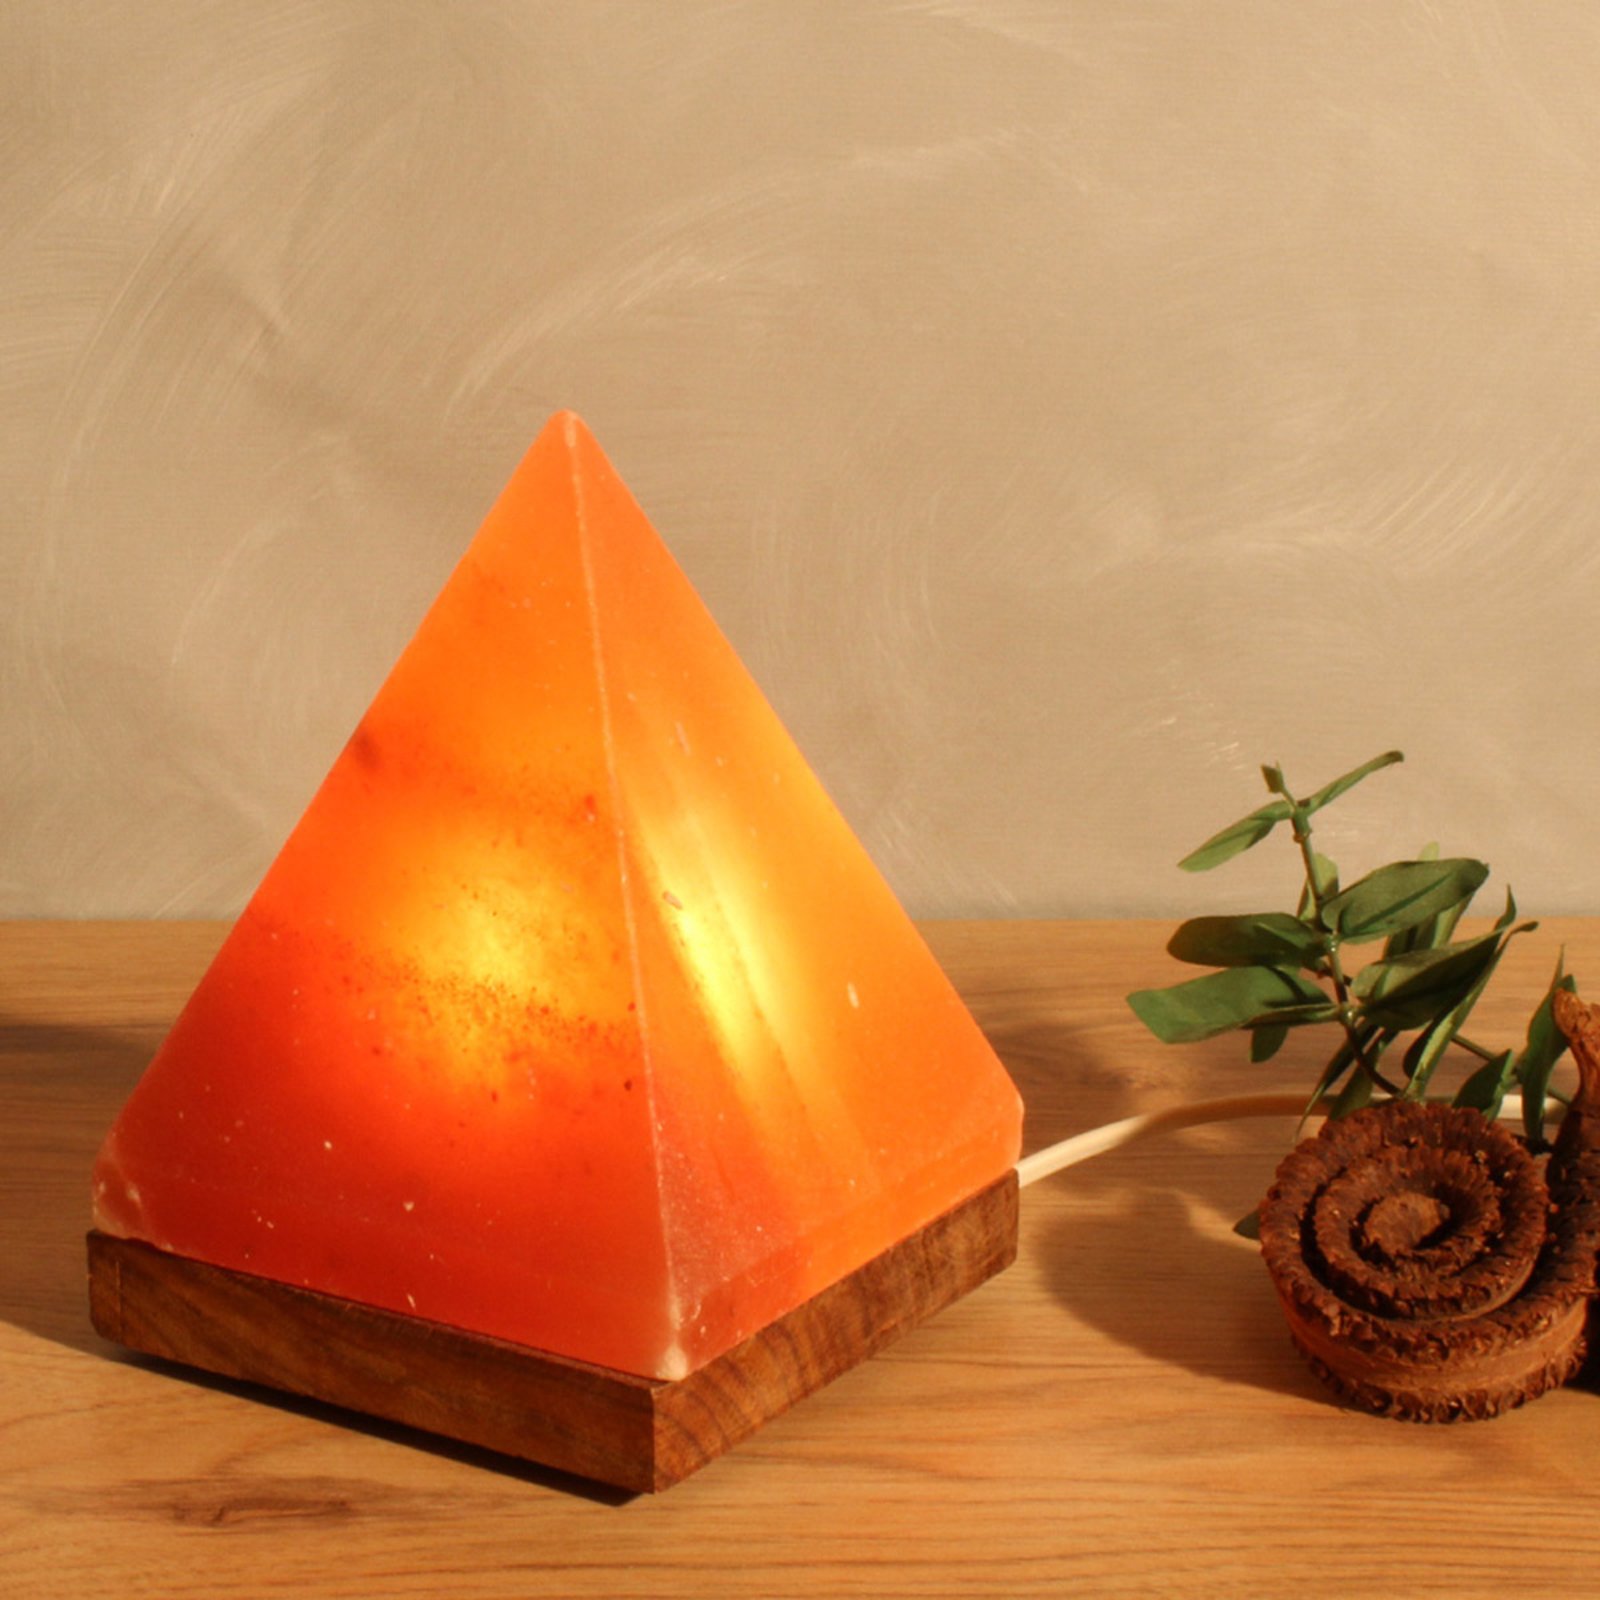 Salt lamp pyramid with base, amber